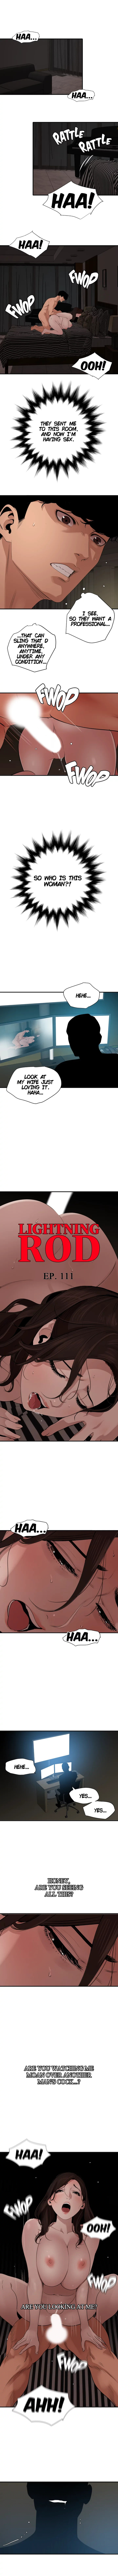 Lightning Rod - chapter 111 - #1